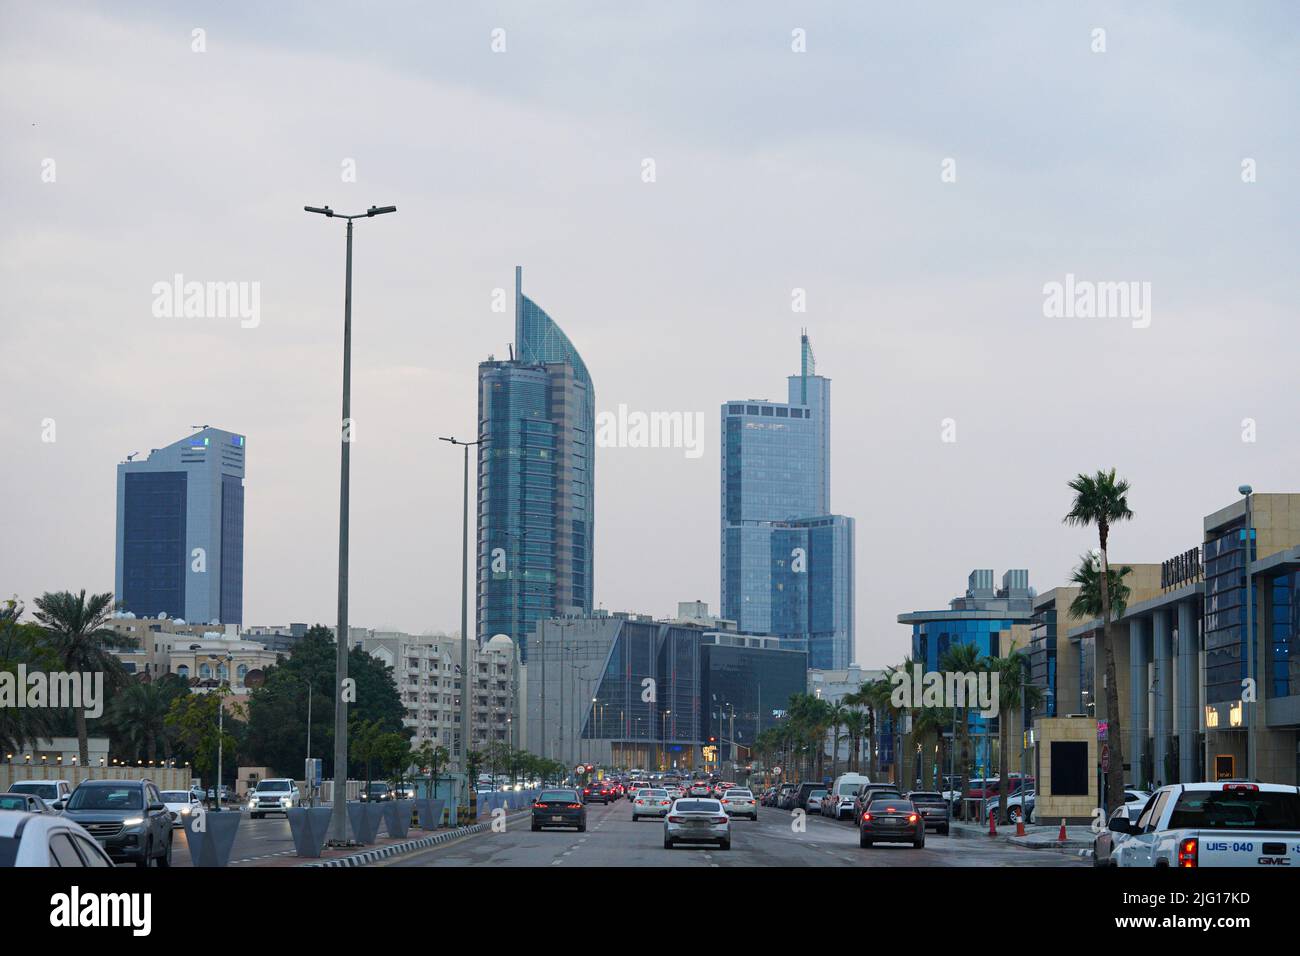 Al Khobar city Morning view from a traffic light. with sky scrapper and construction. City Khobar, Saudi Arabia Stock Photo